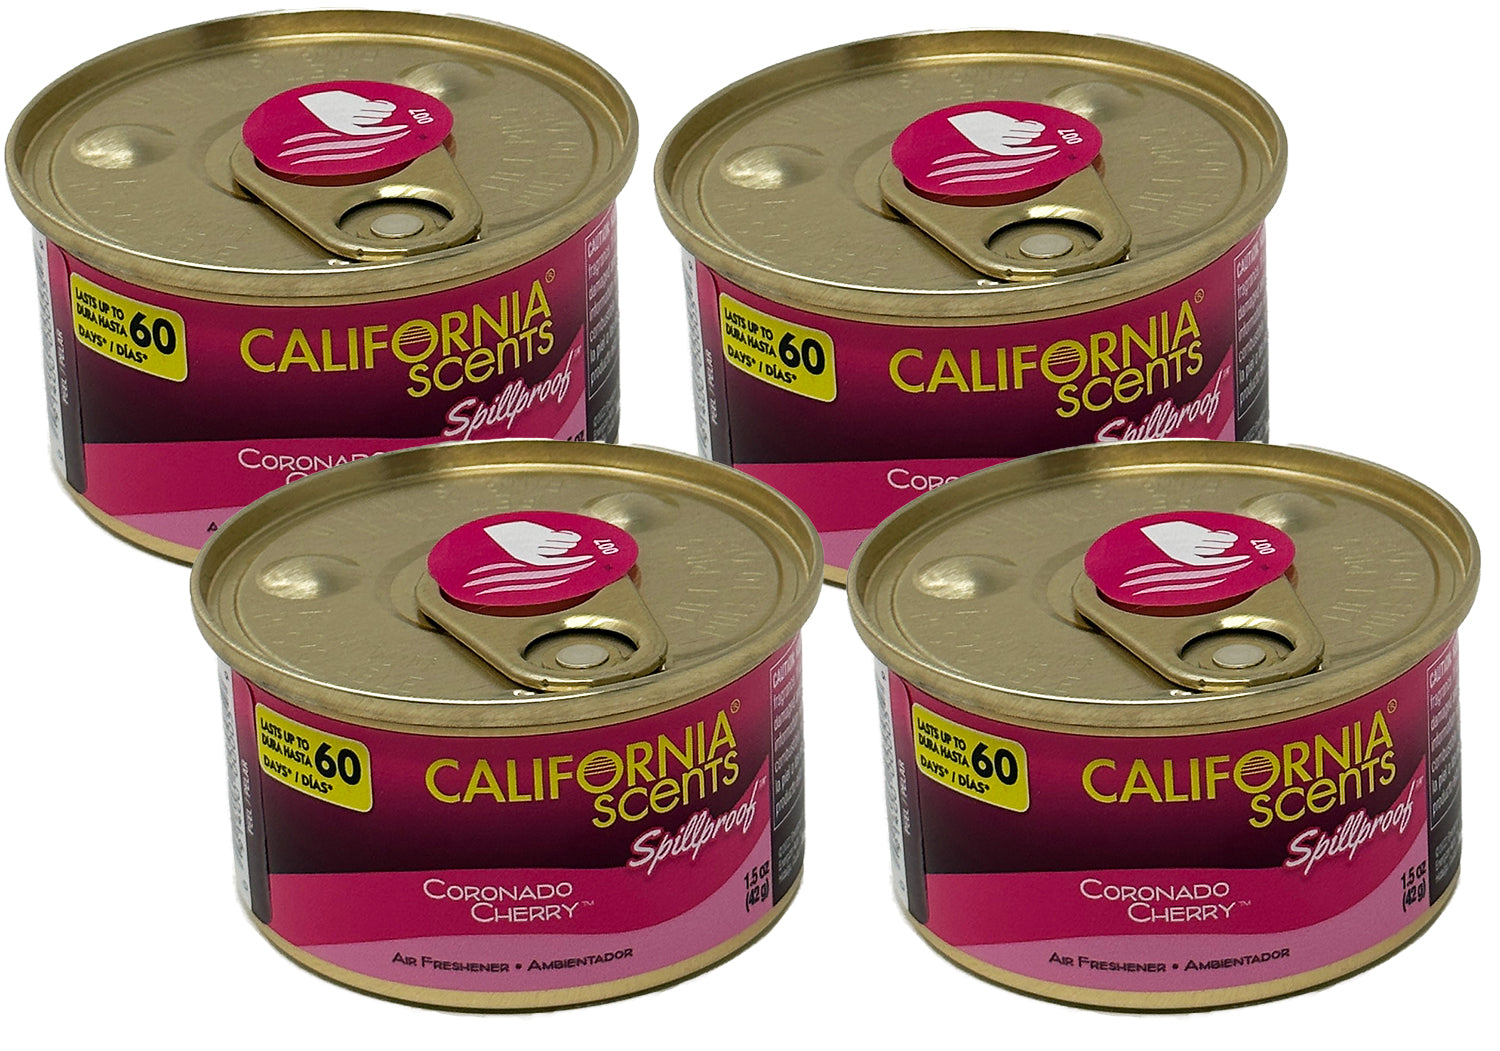 California Scent Car Scent Organic Coronado Cherry - DIY Hardware